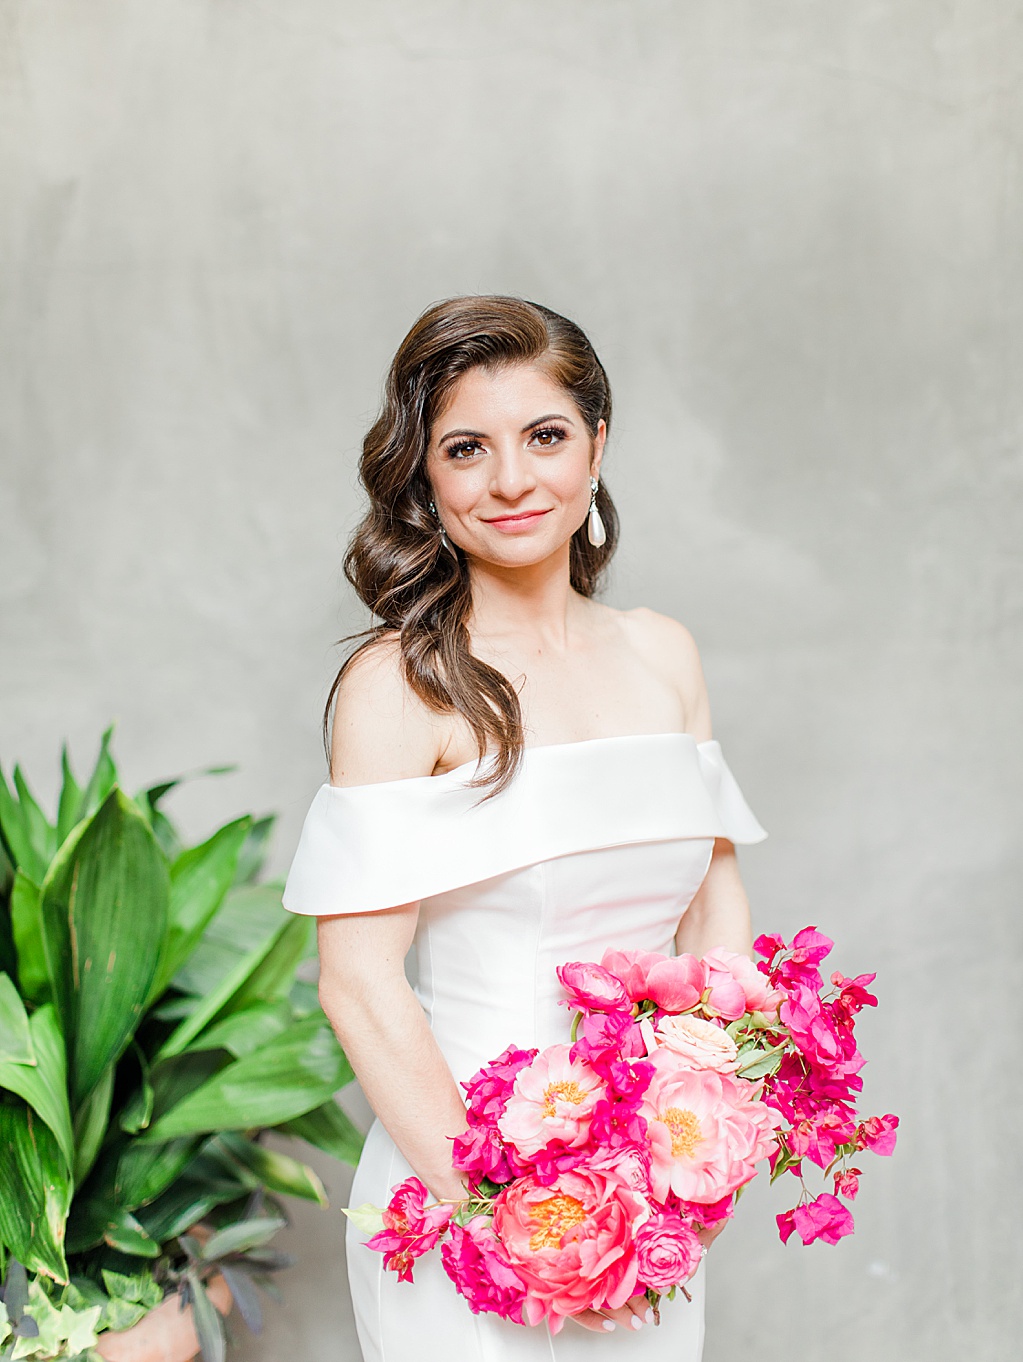 Spring Bridal Photos at The Hotel Emma in San Antonio Texas with Bougainvillea bouquet 0003